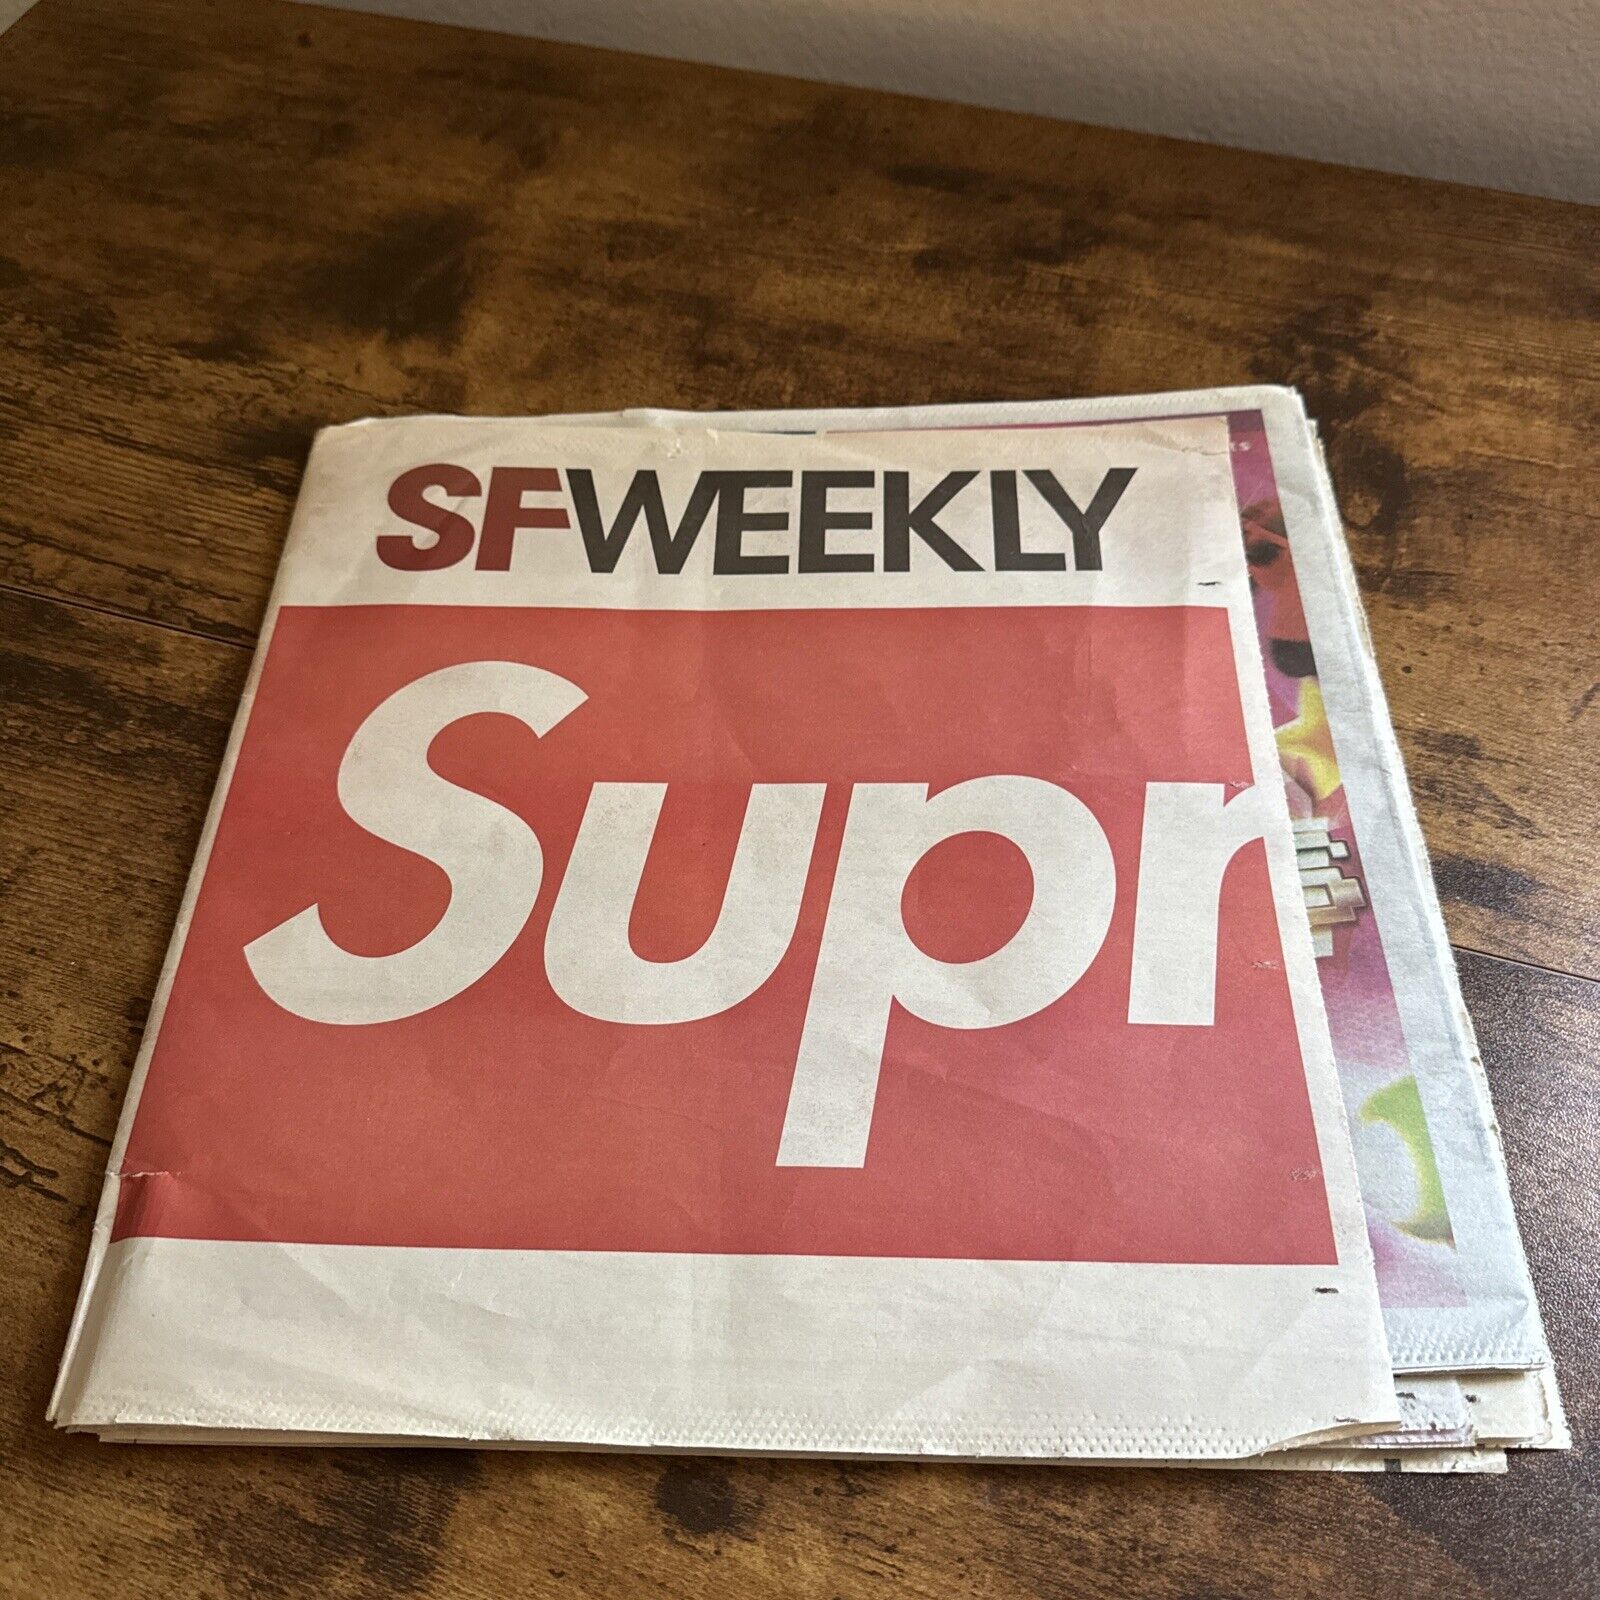 SUPREME NEWSPAPER - SF WEEKLY San Francisco Weekly - October 24th